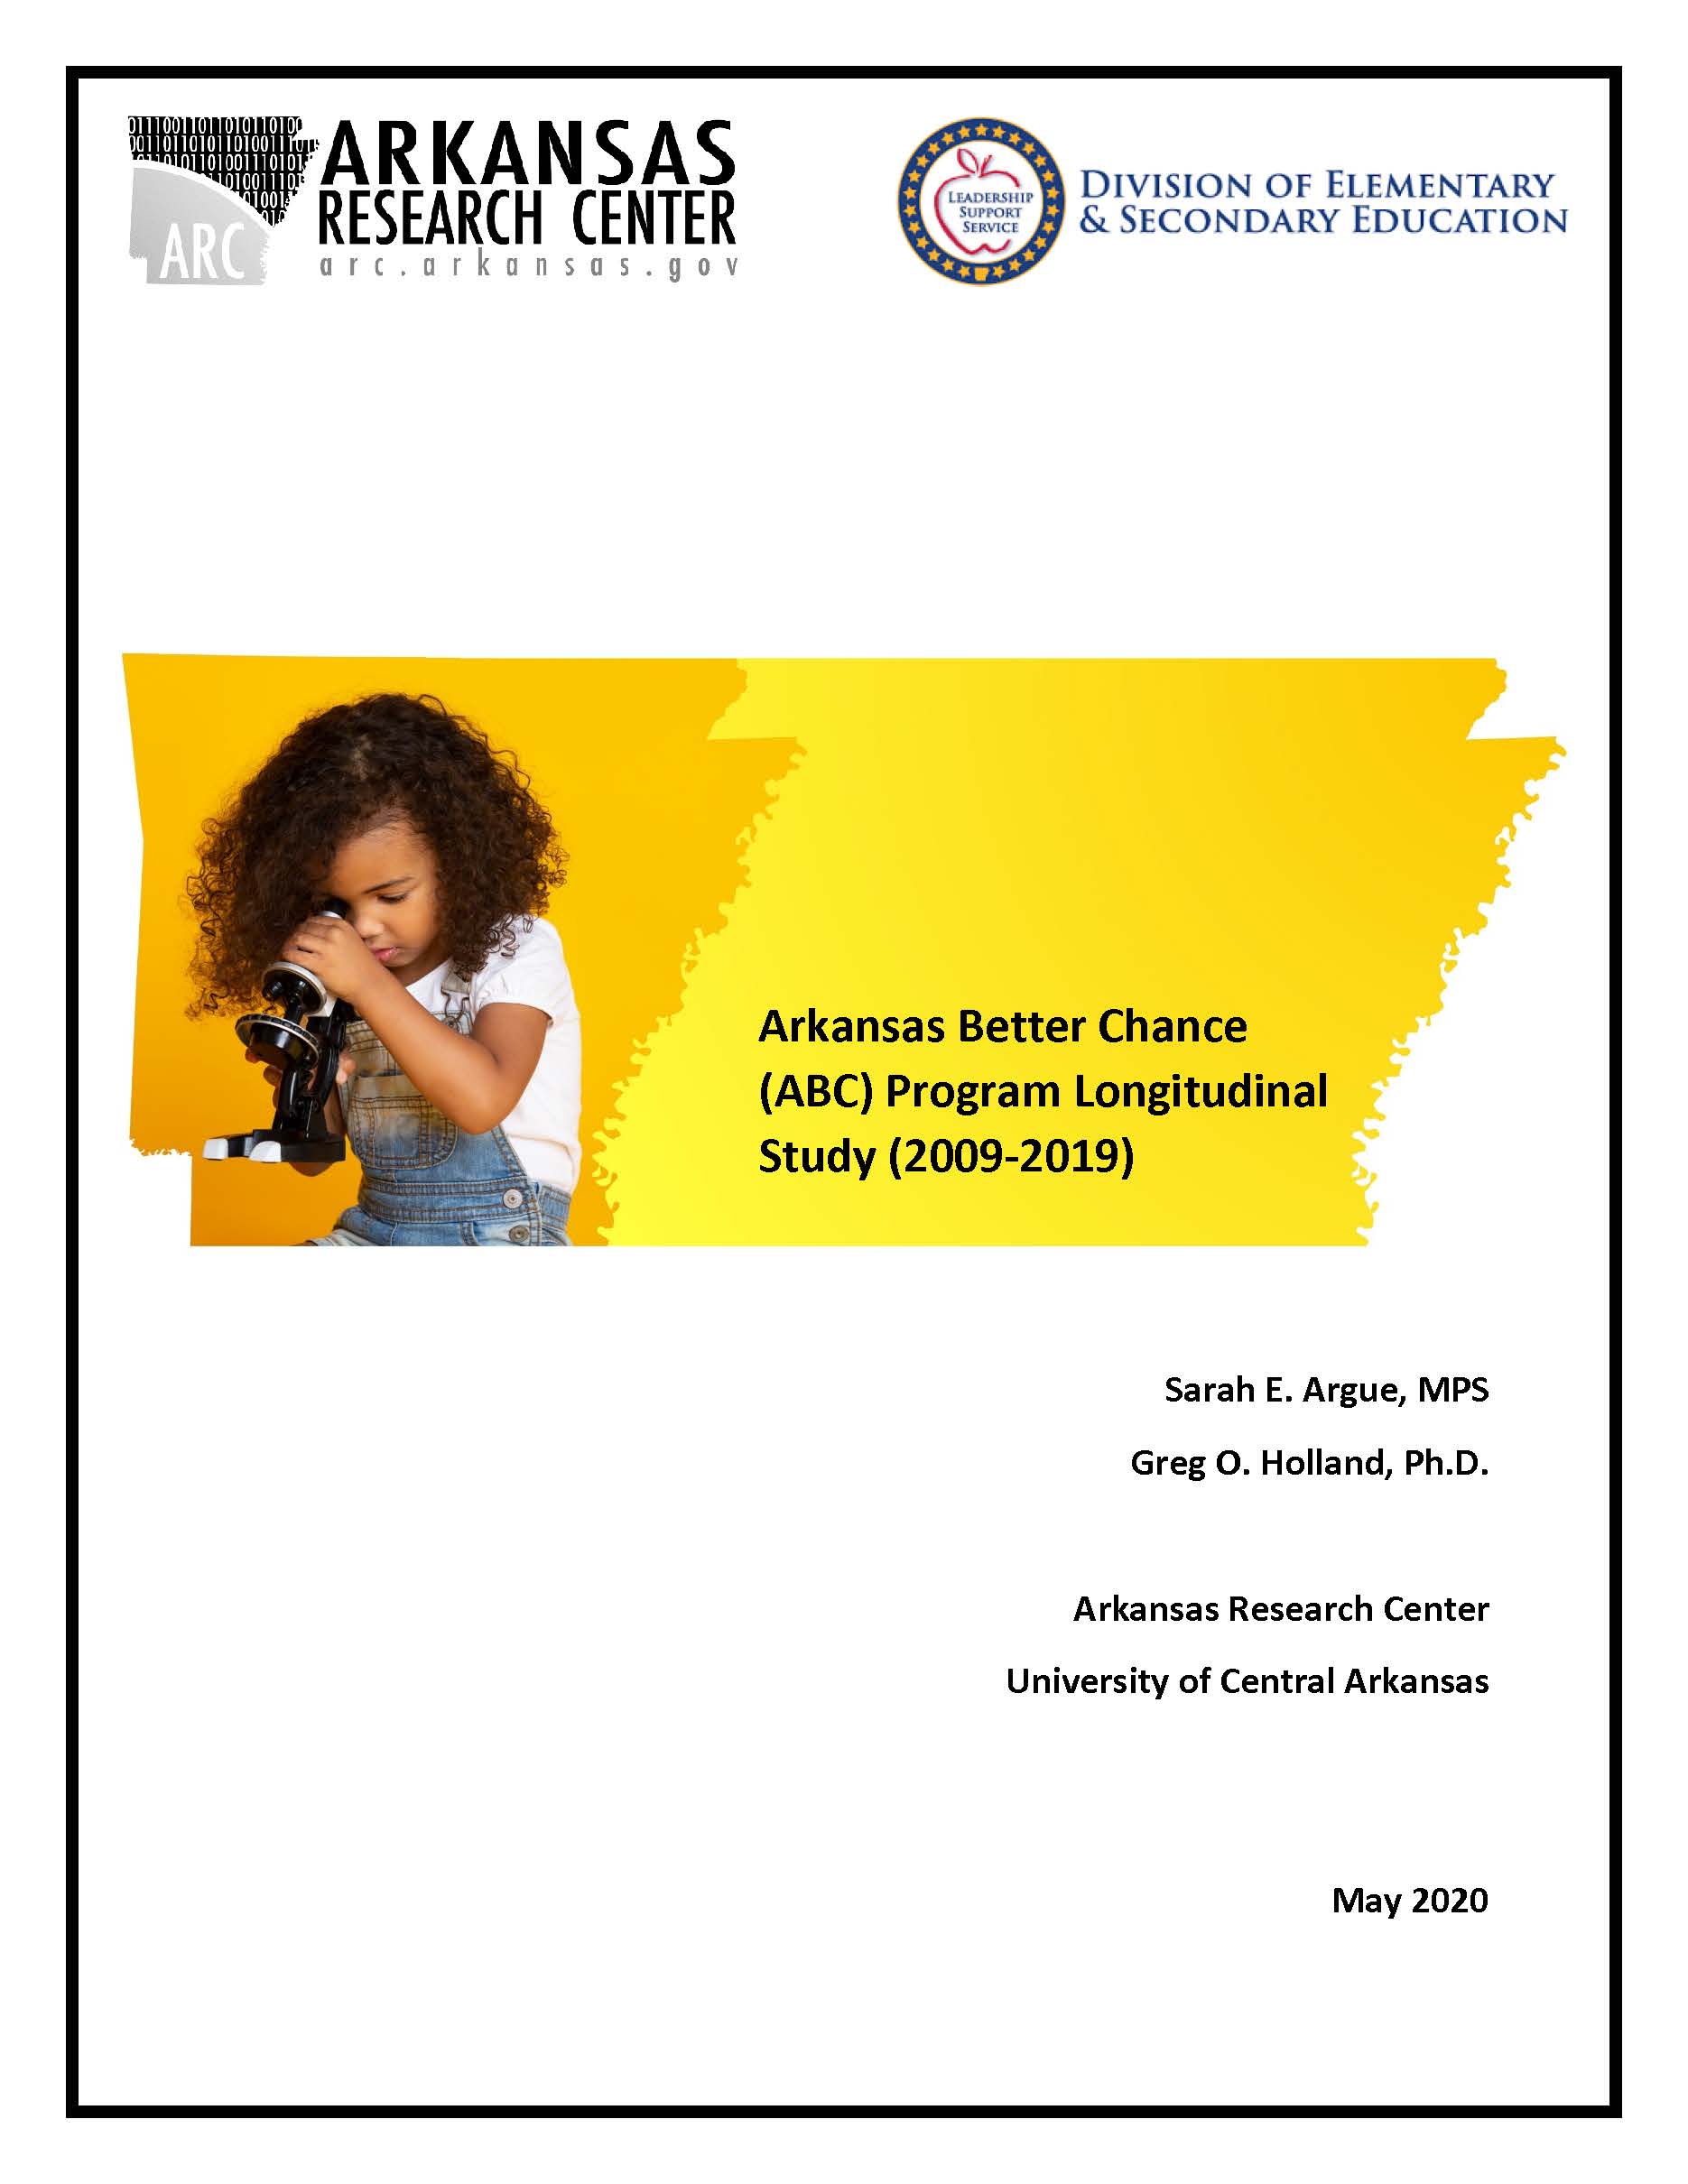 Arkansas Better Chance (ABC) Program Longitudinal Study (2009-2019)